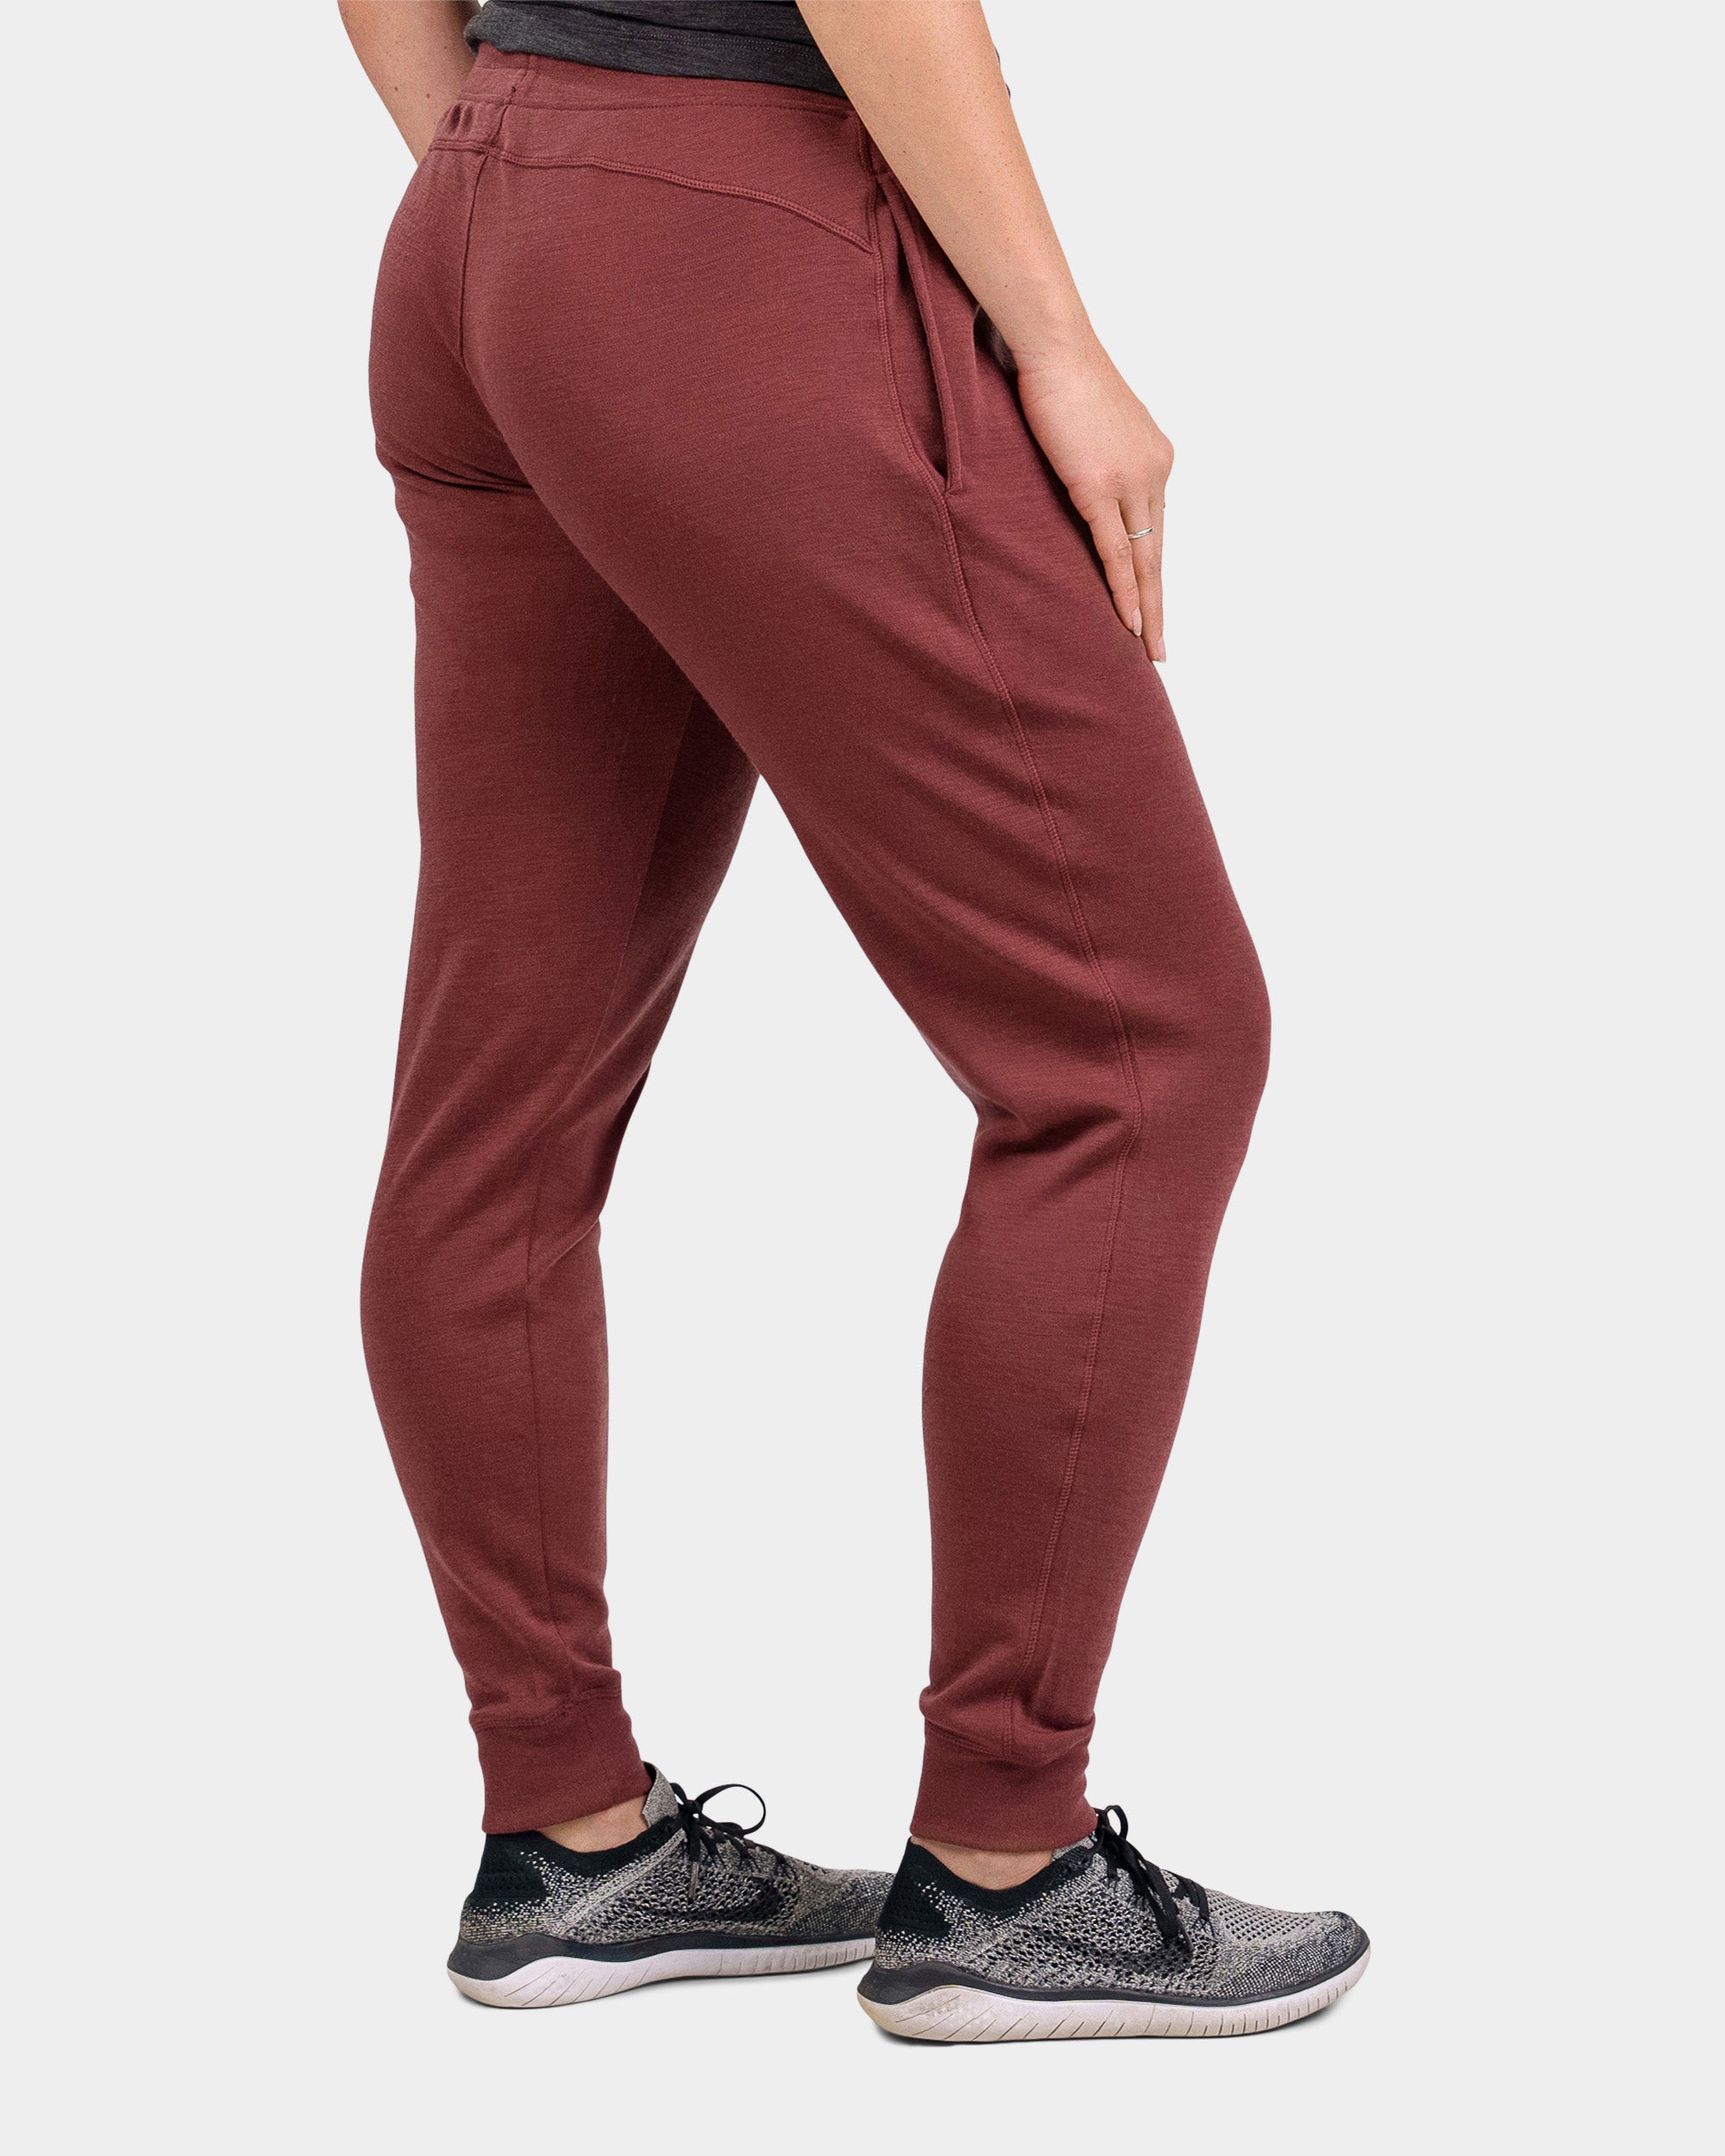 Lululemon Burgundy/Red Merlot leggings. Size 6. Great condition. Has  pockets.